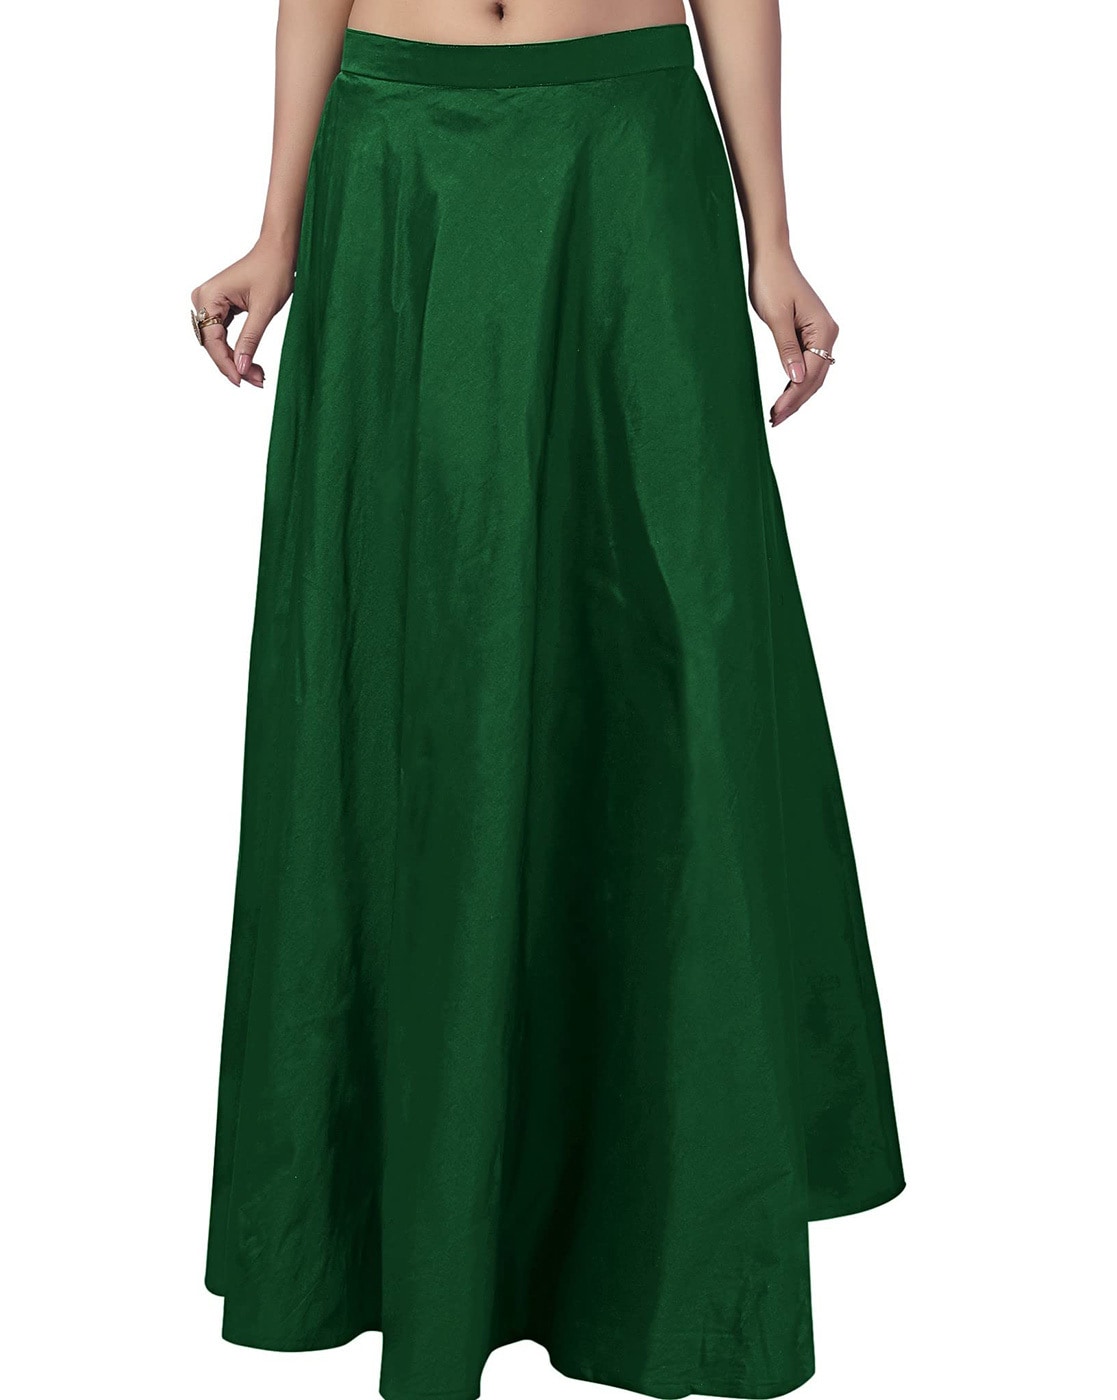 Buy Teal Green Skirts & Ghagras for Women by Juniper Online | Ajio.com